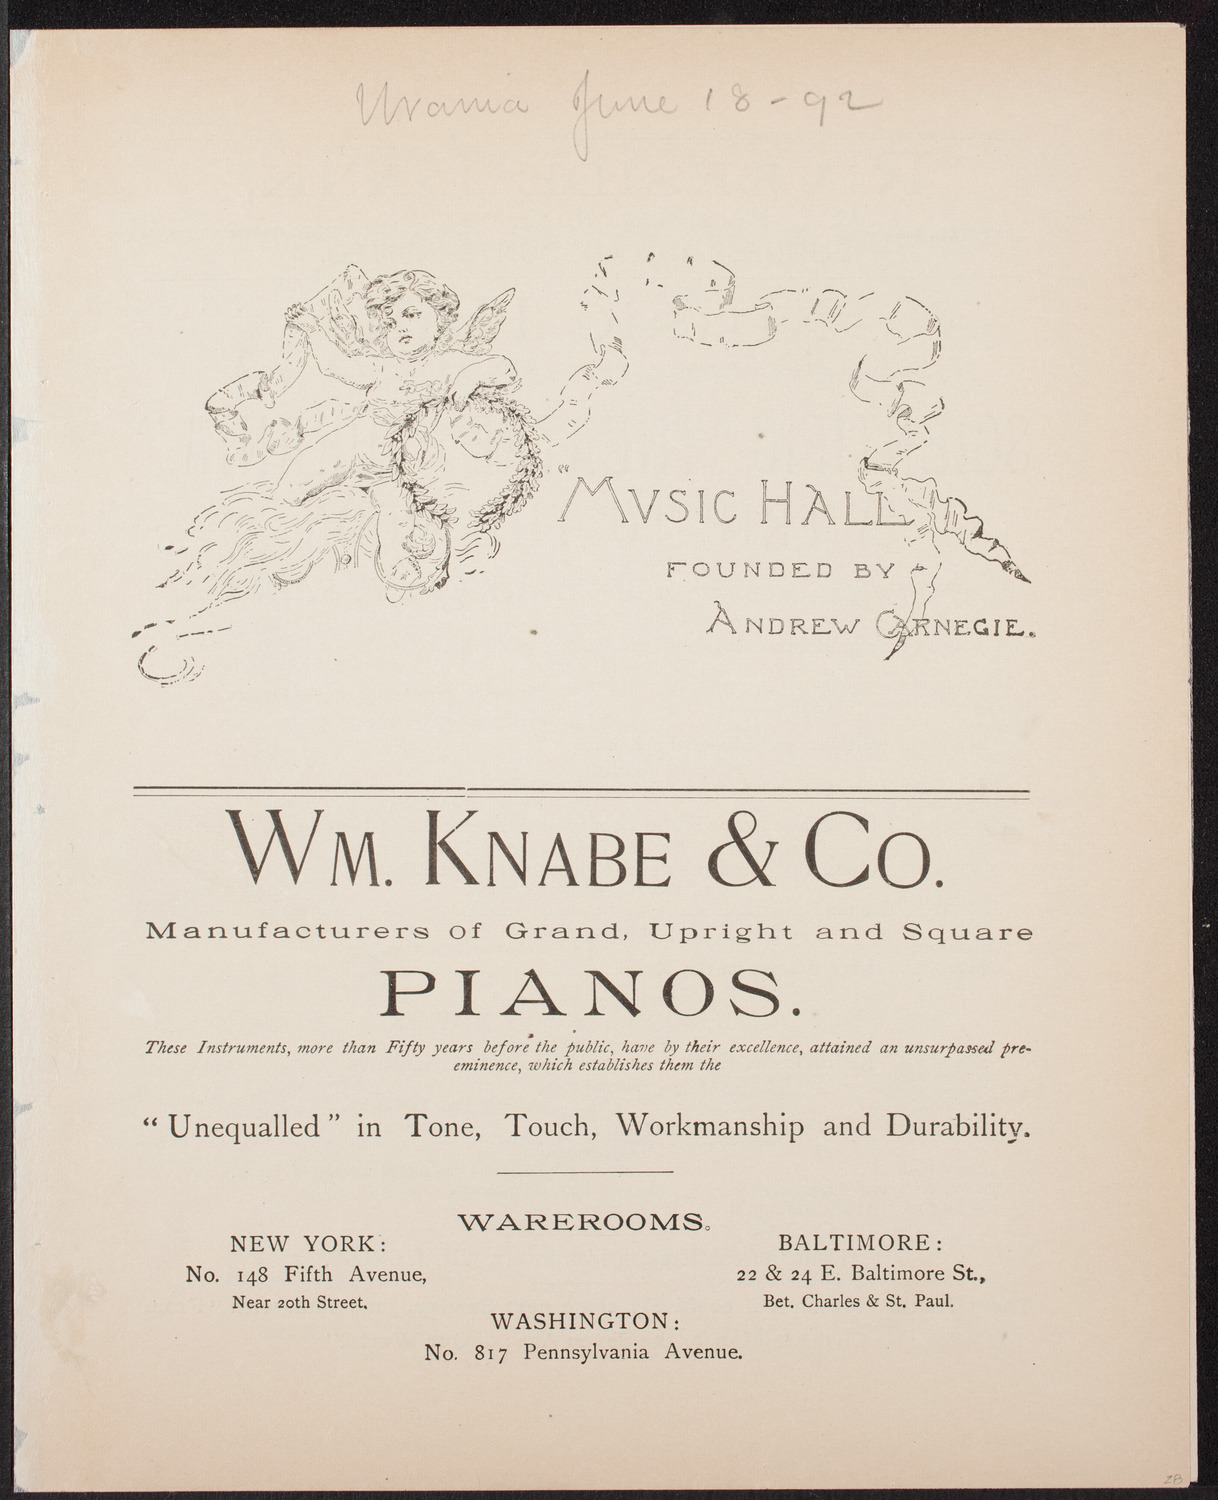 Urania Scientific Theatre, June 18, 1892, program page 1